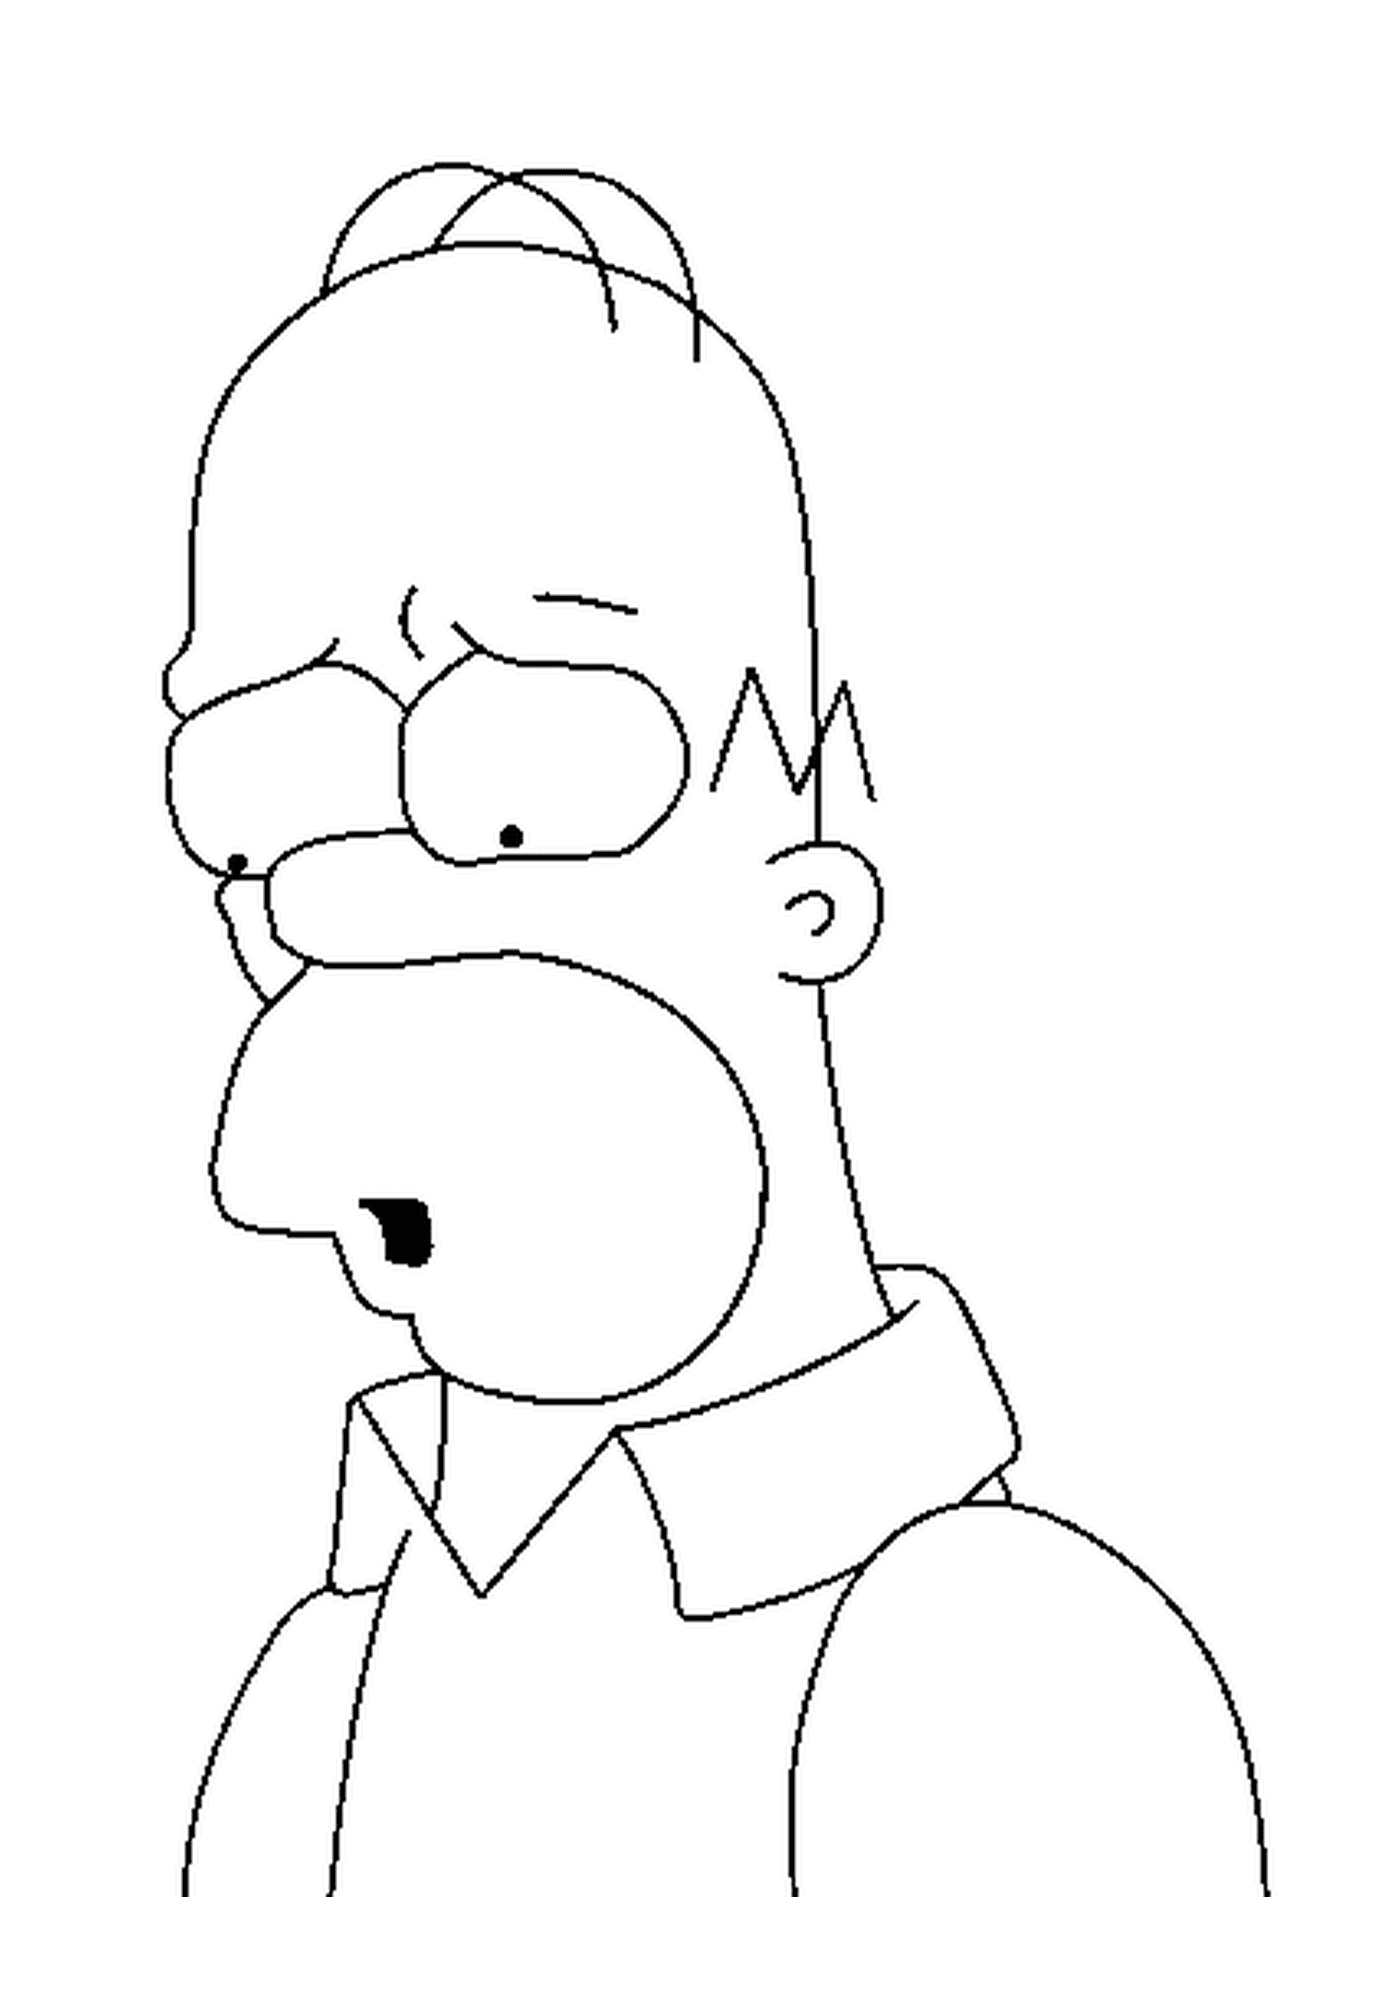  Homer Simpson, faccia triste 